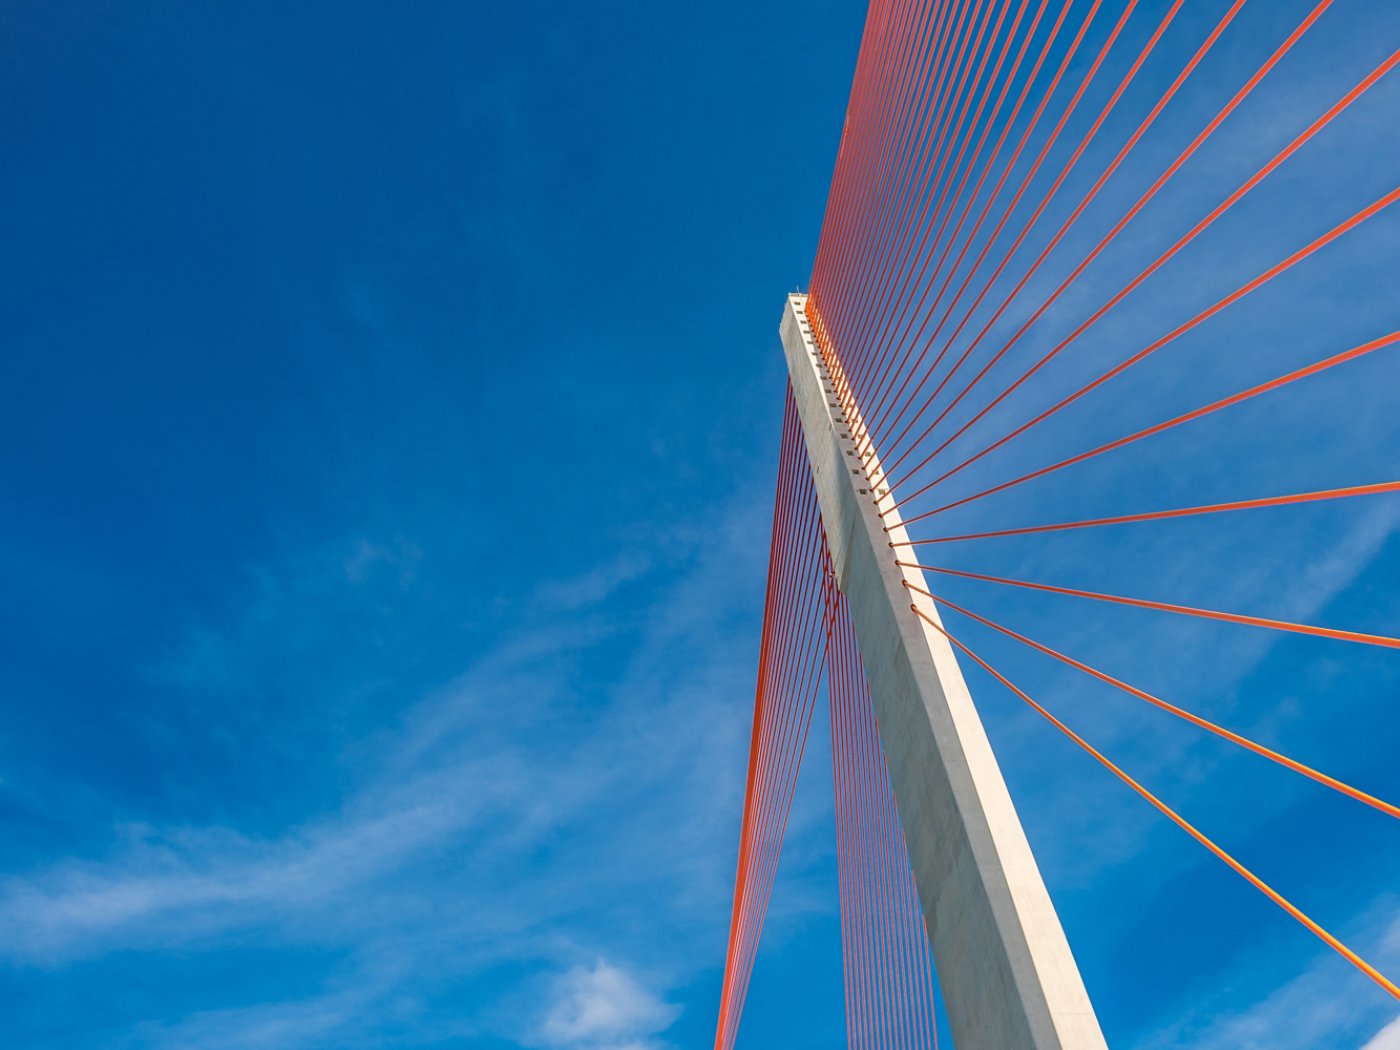 A worm's eye view of a modern suspension bridge